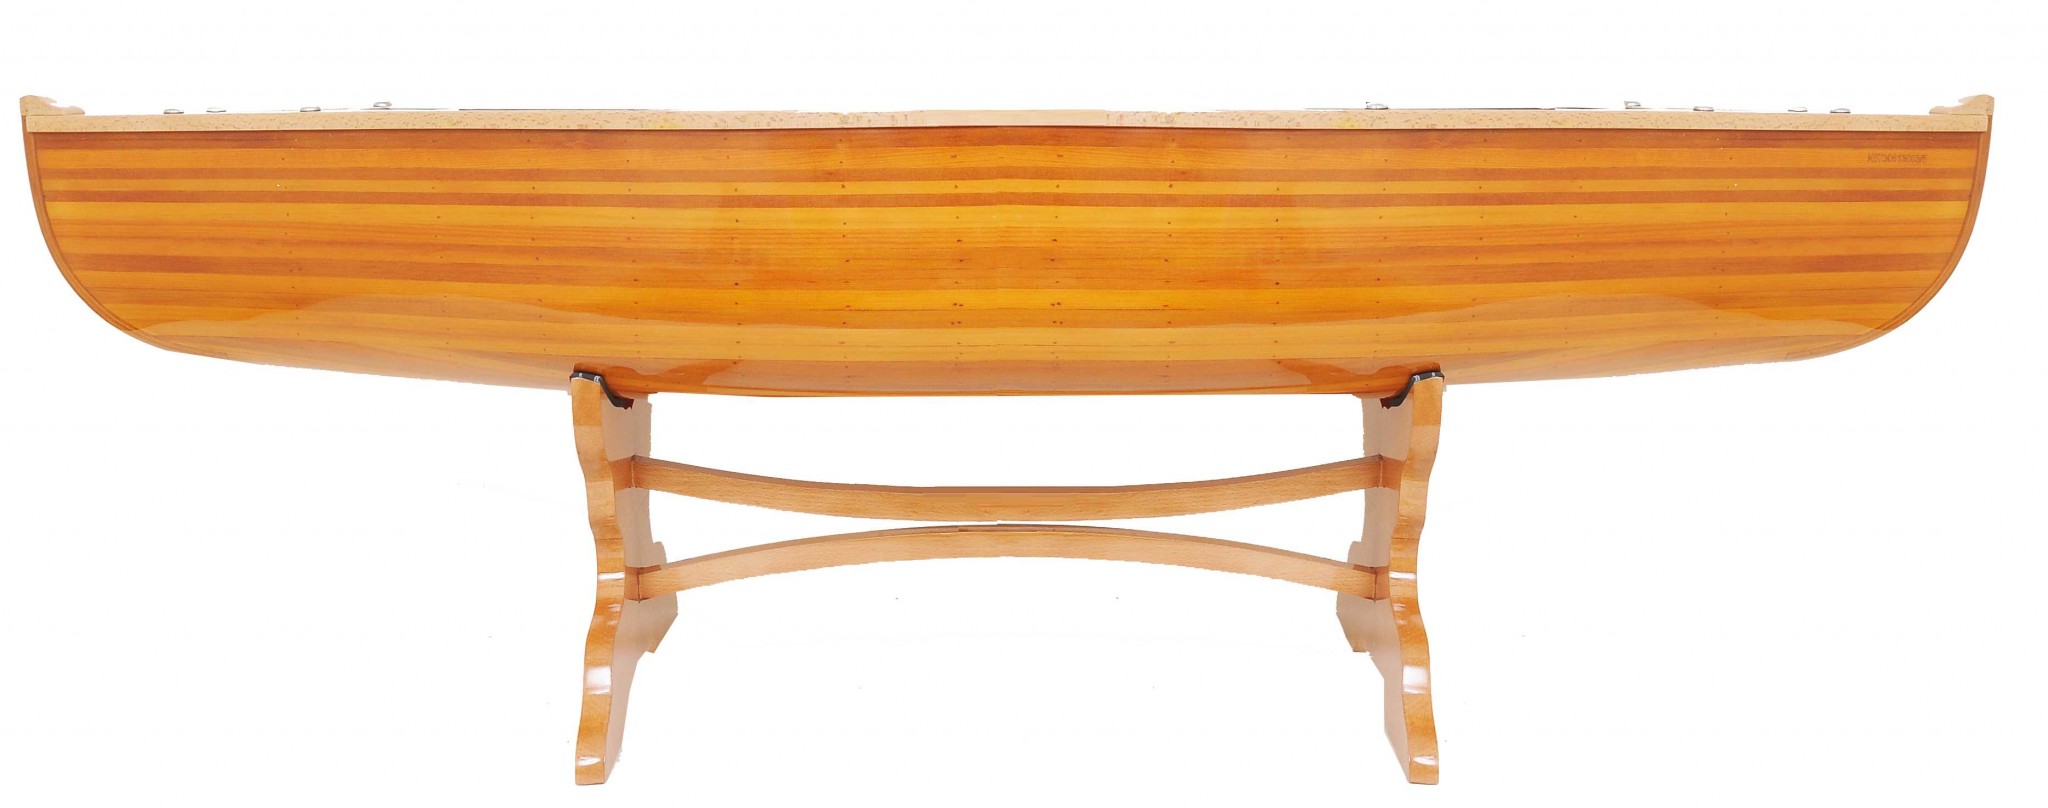 16.75" x 59.5" x 19.75" Wooden Canoe - Table